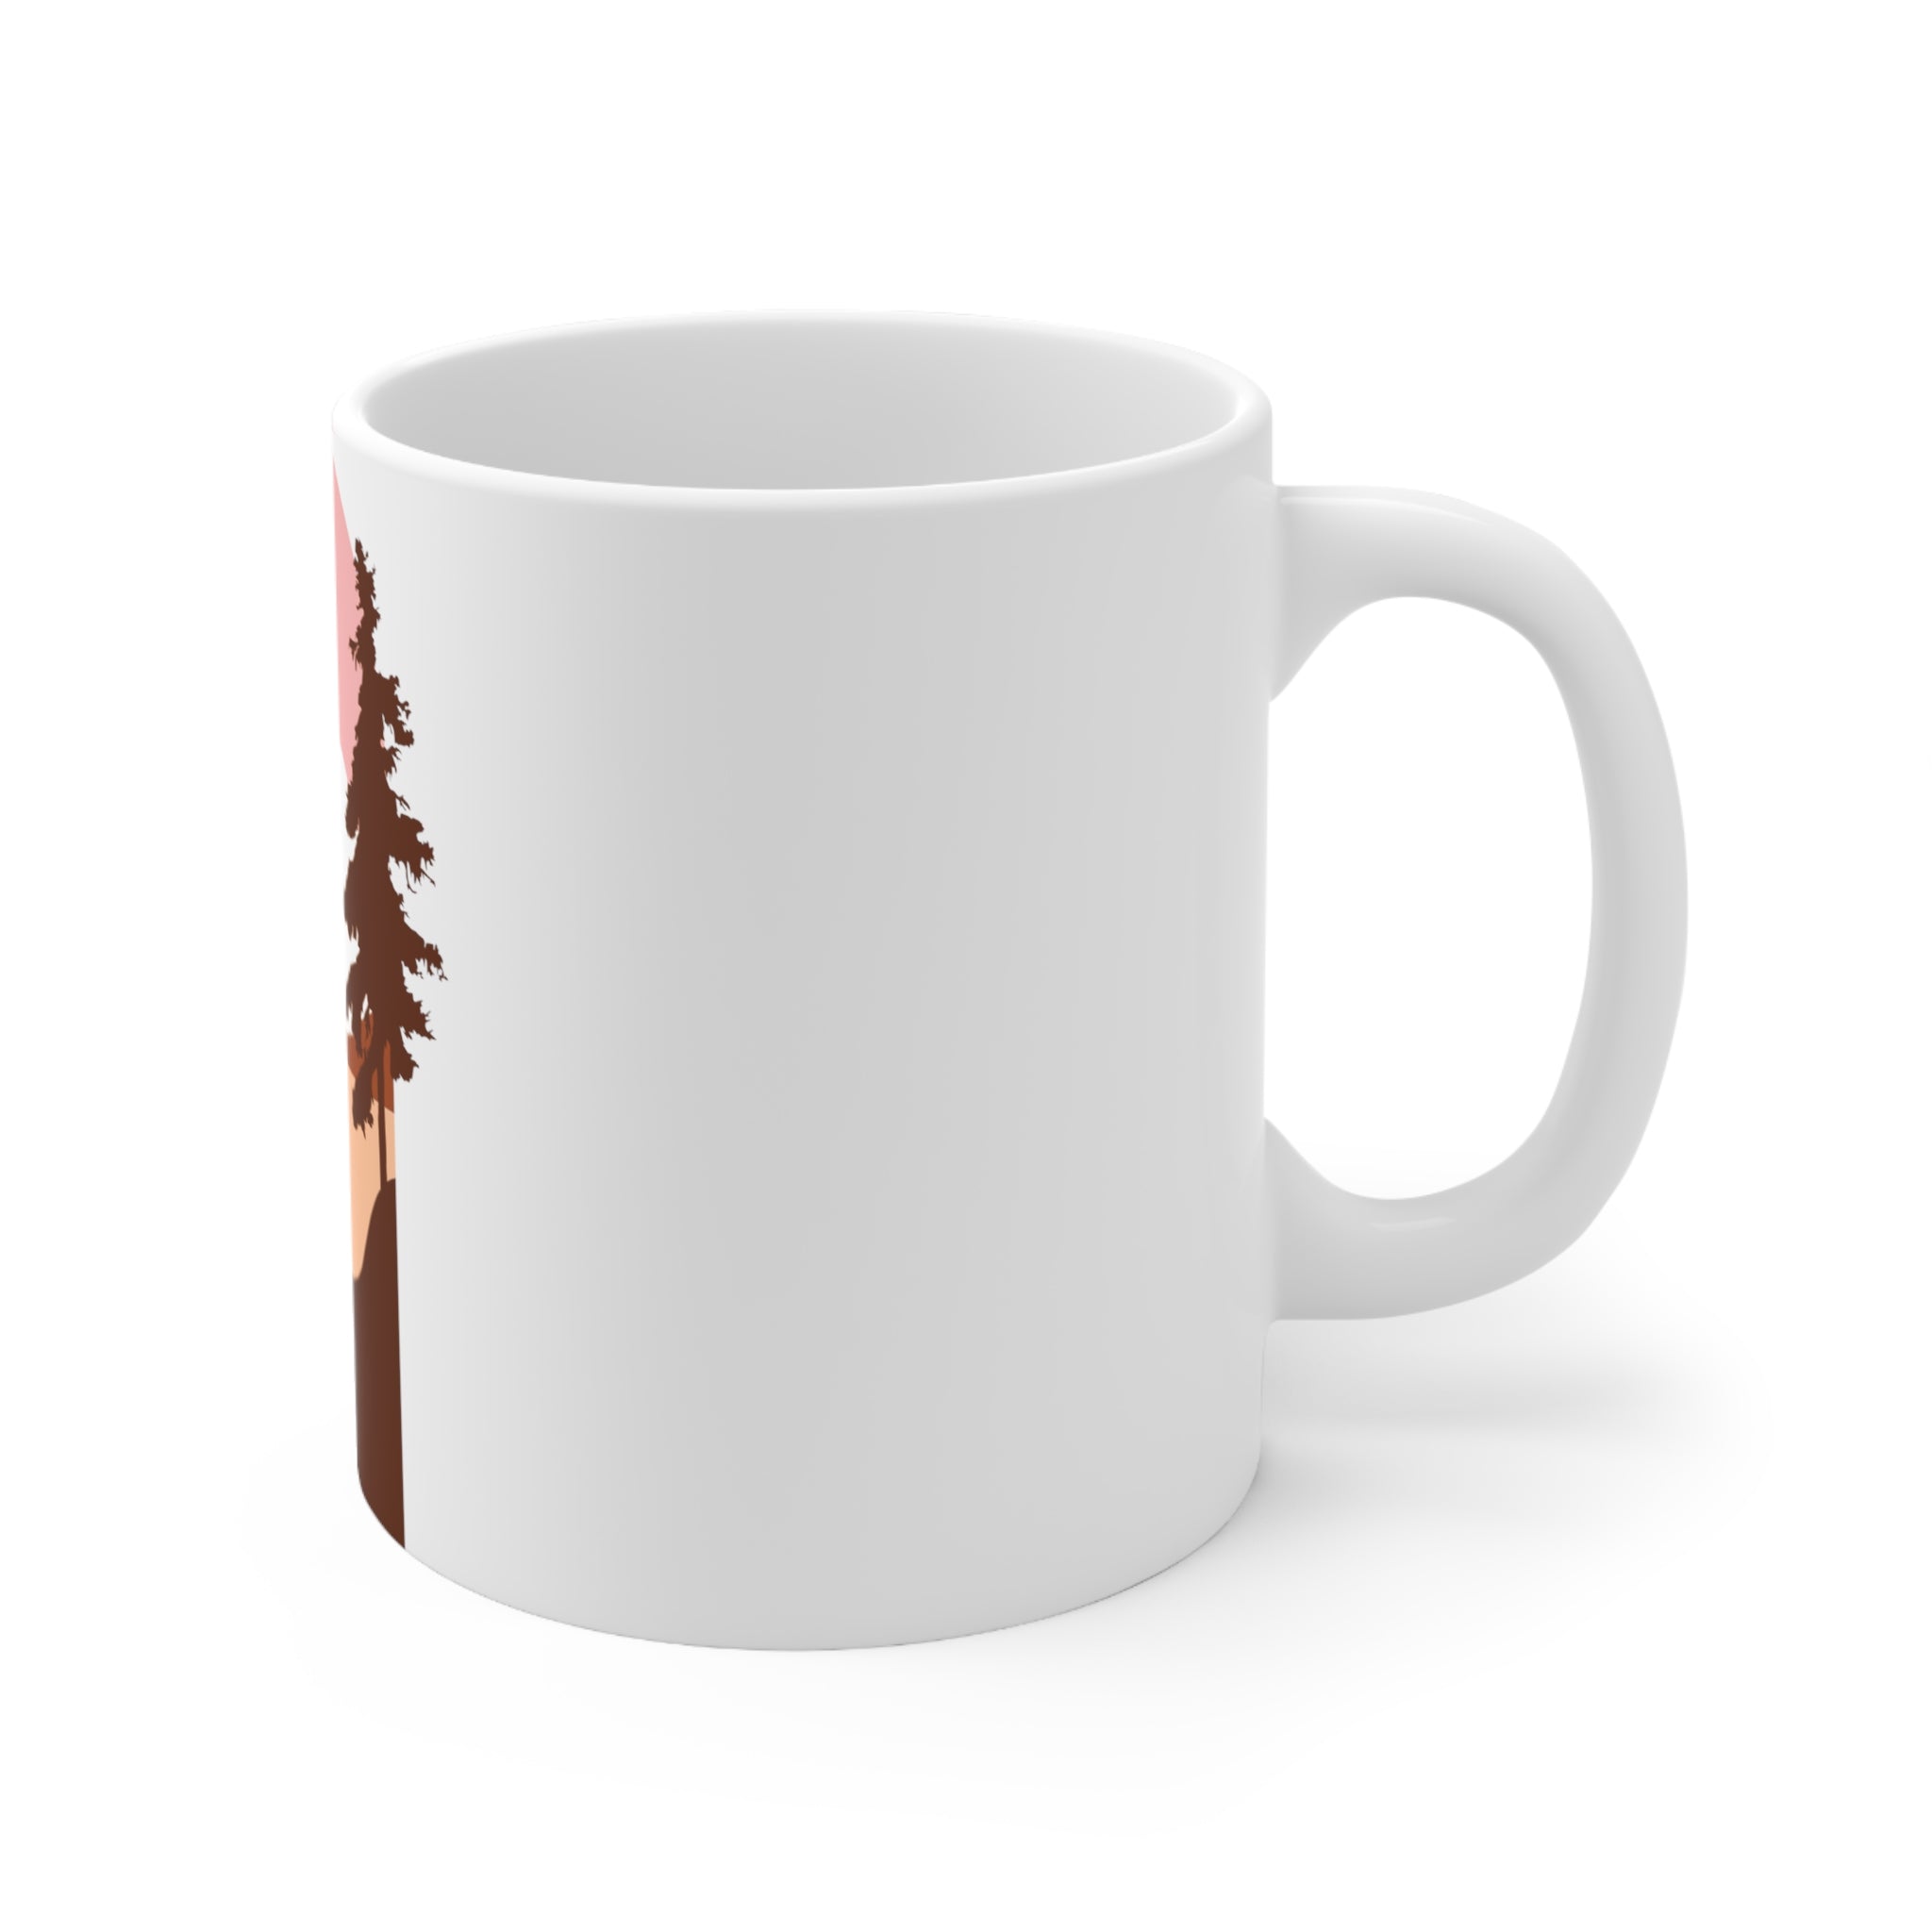 Nature vibes - Accent Coffee Mug, 11oz (UK/USA/AUS)